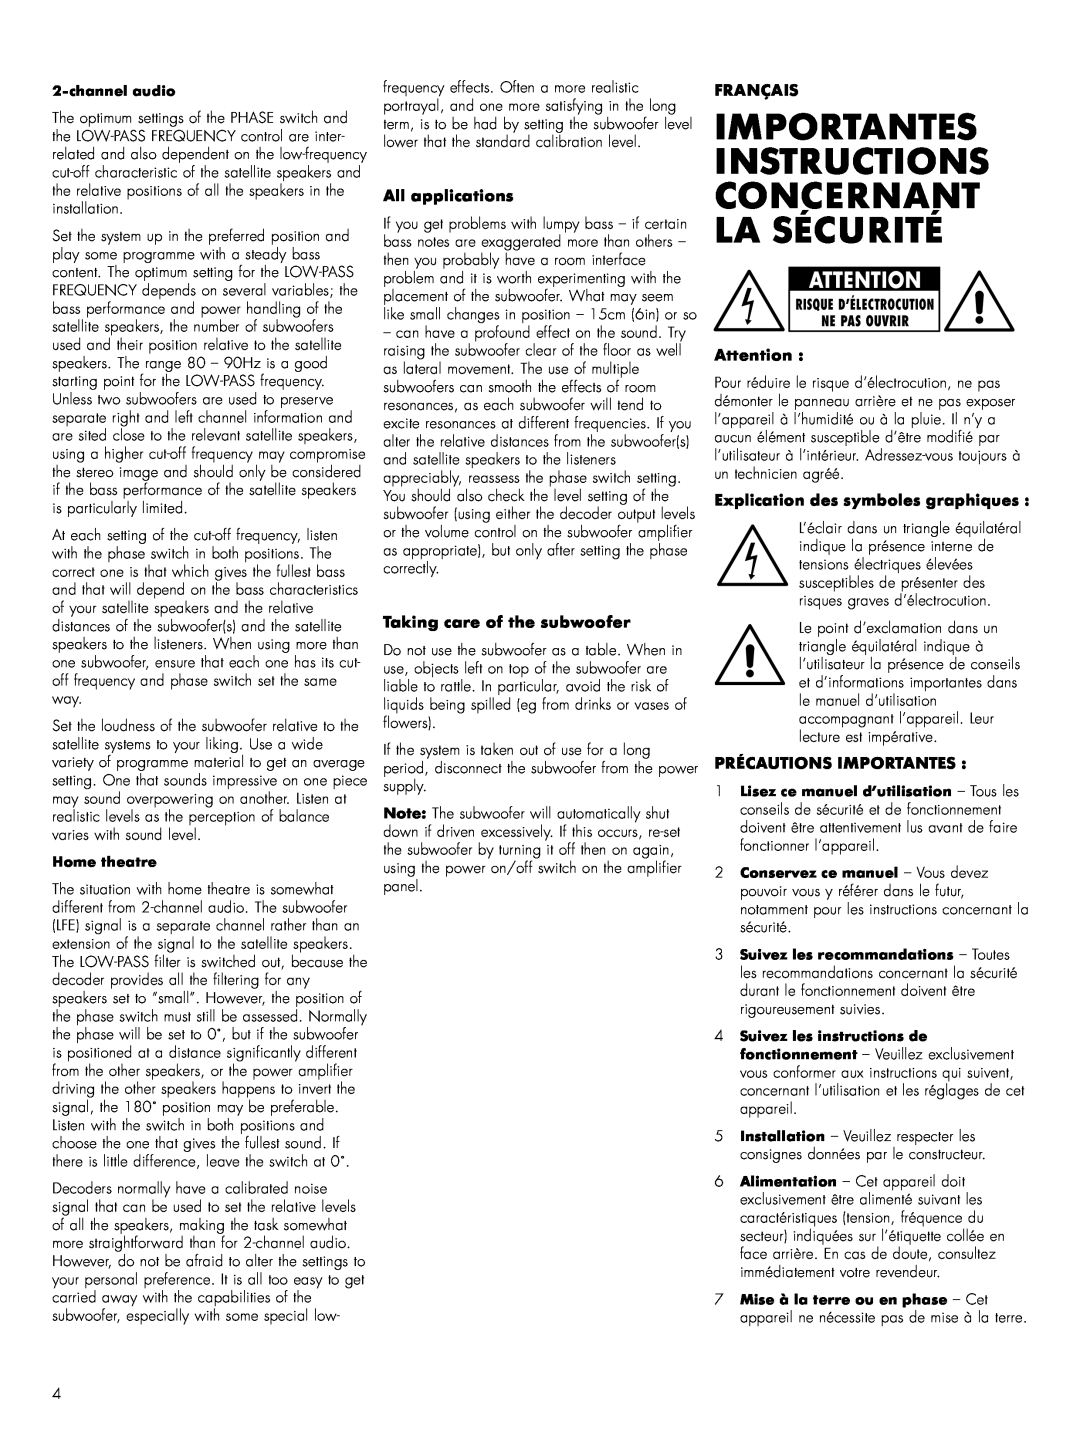 Bowers & Wilkins ASWCM Importantes Instructions Concernant La Sécurité, All applications, Taking care of the subwoofer 